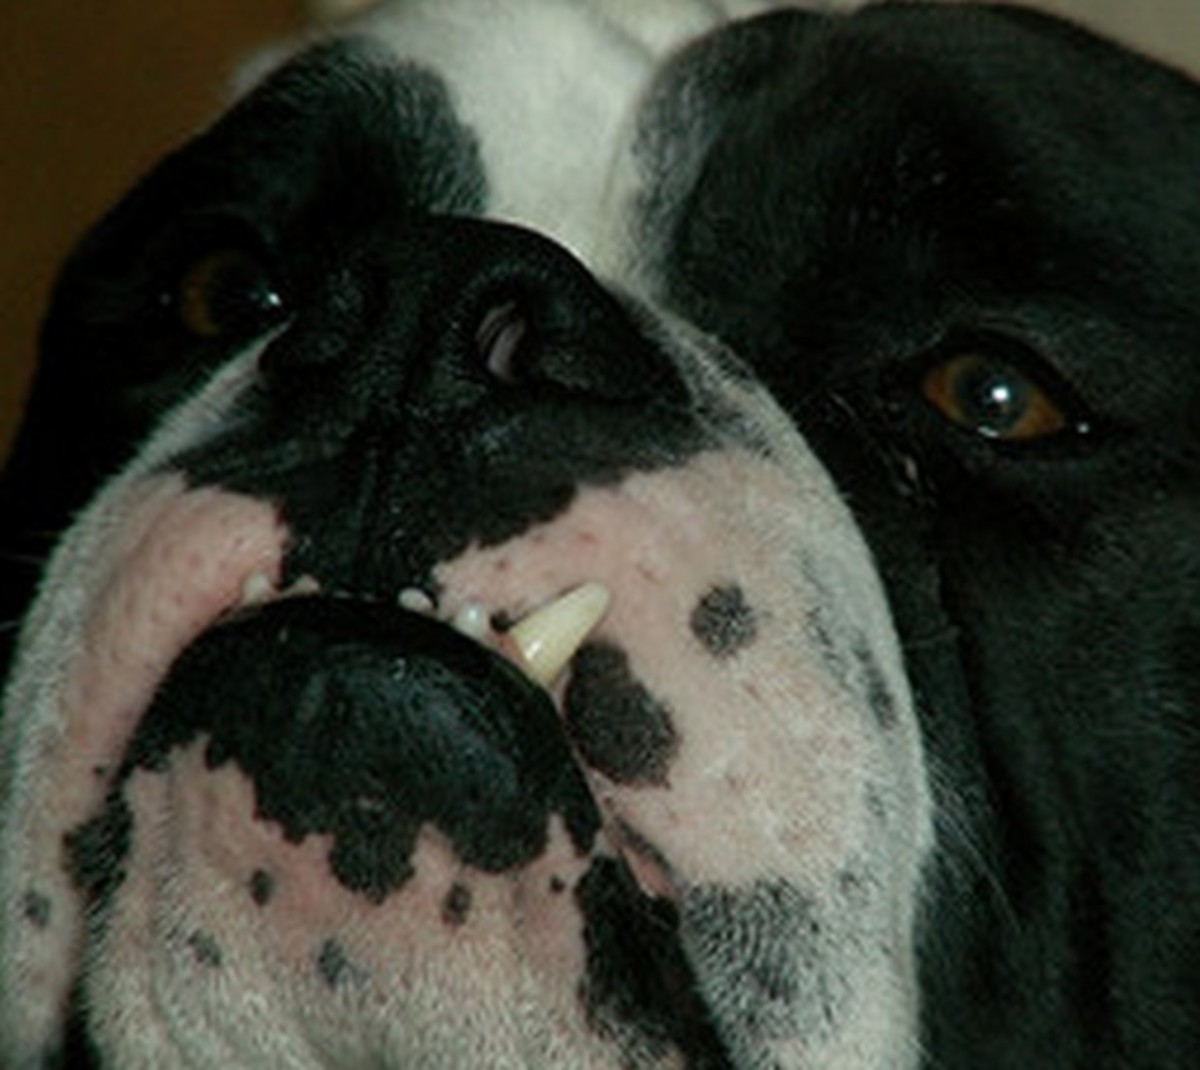 Undershot bites are common in bulldogs.